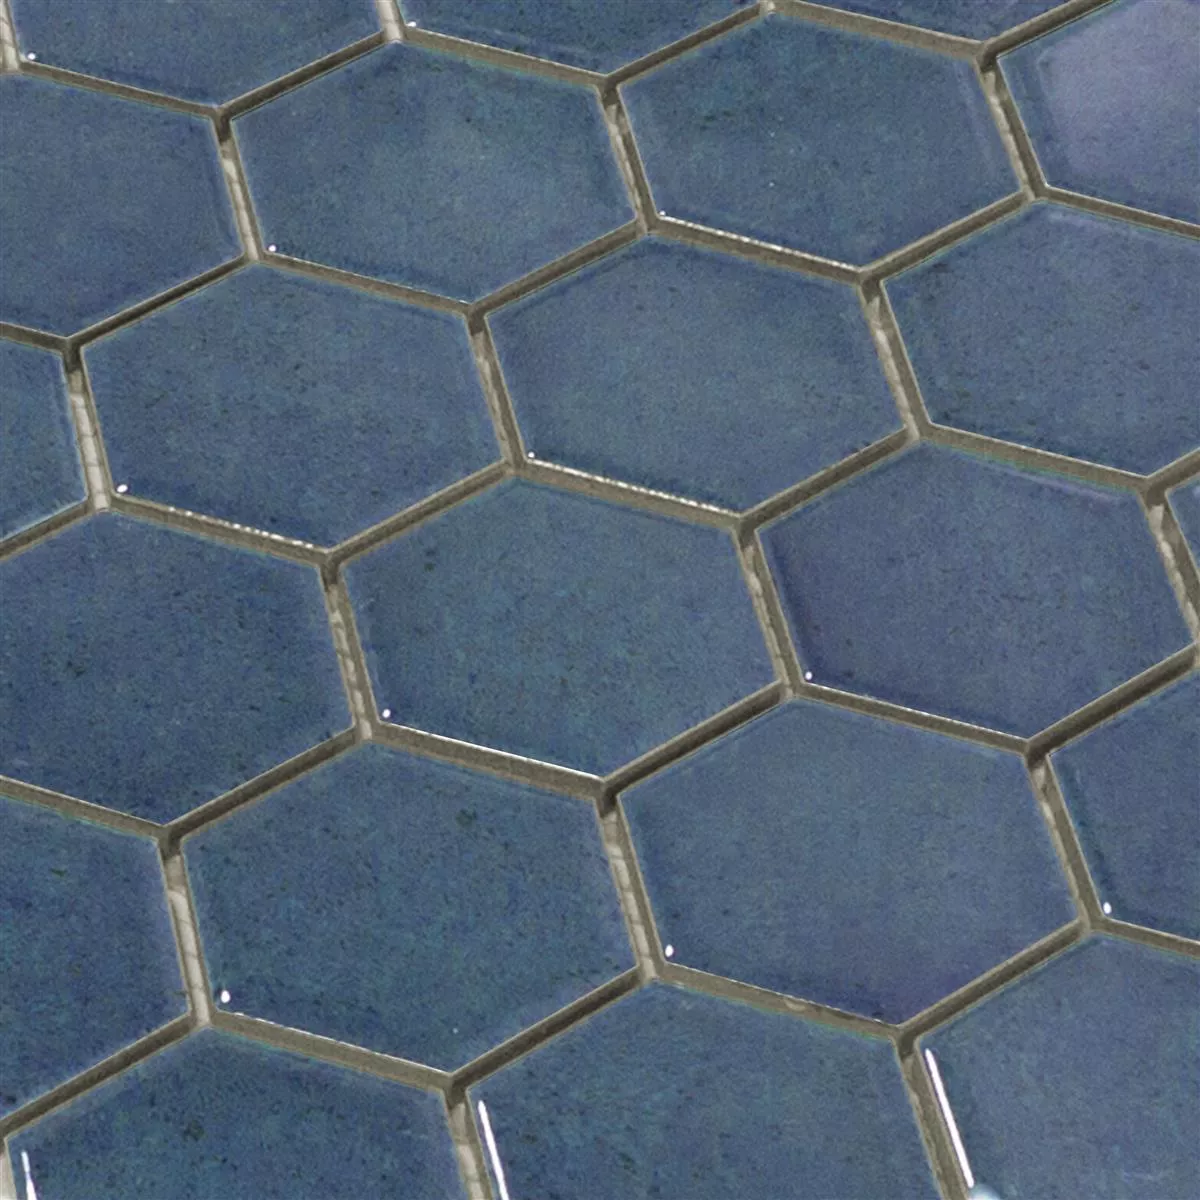 Ceramic Mosaic Tiles Eldertown Hexagon Dark Blue